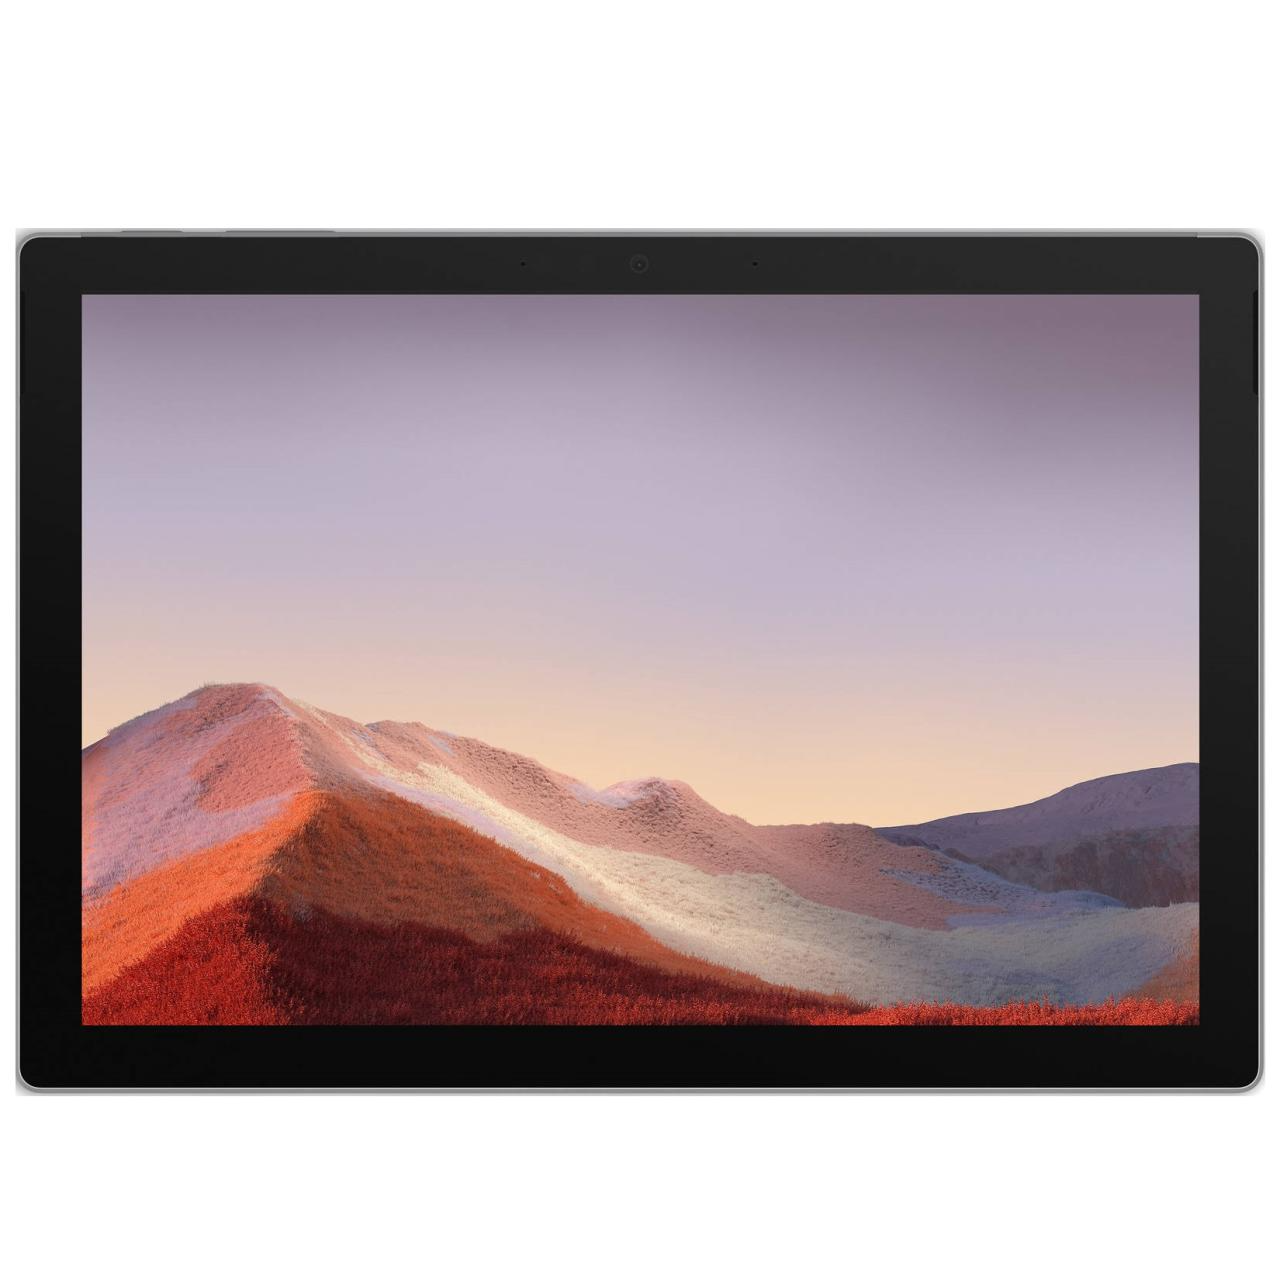 تبلت-Tablet مايكروسافت-Microsoft Surface Pro 7 -16GB -512SSD